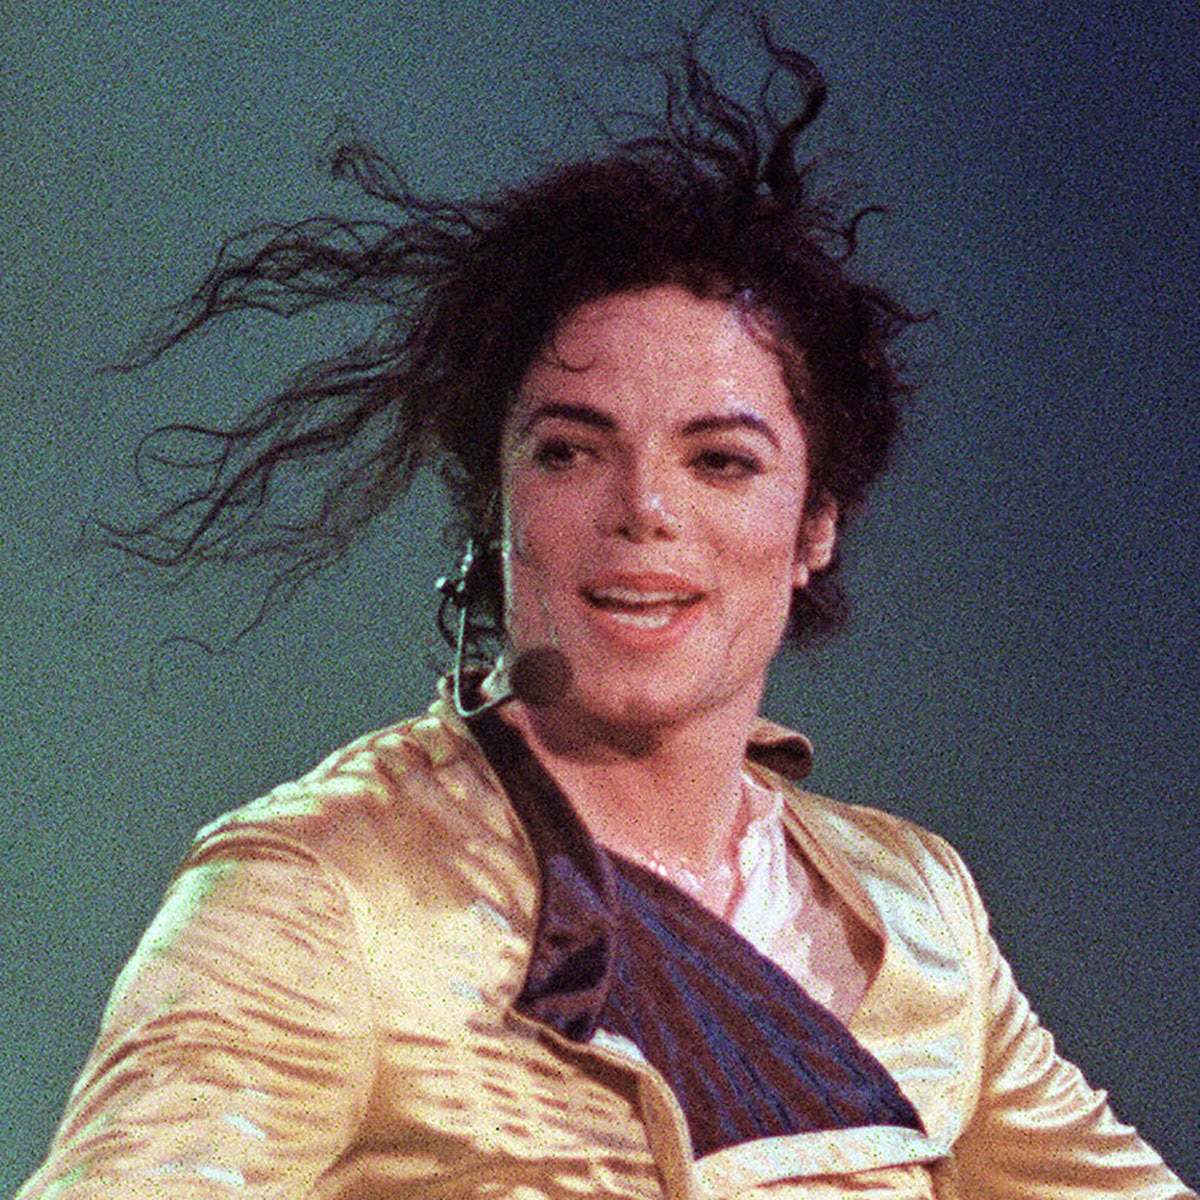 Michael Jackson, 1996